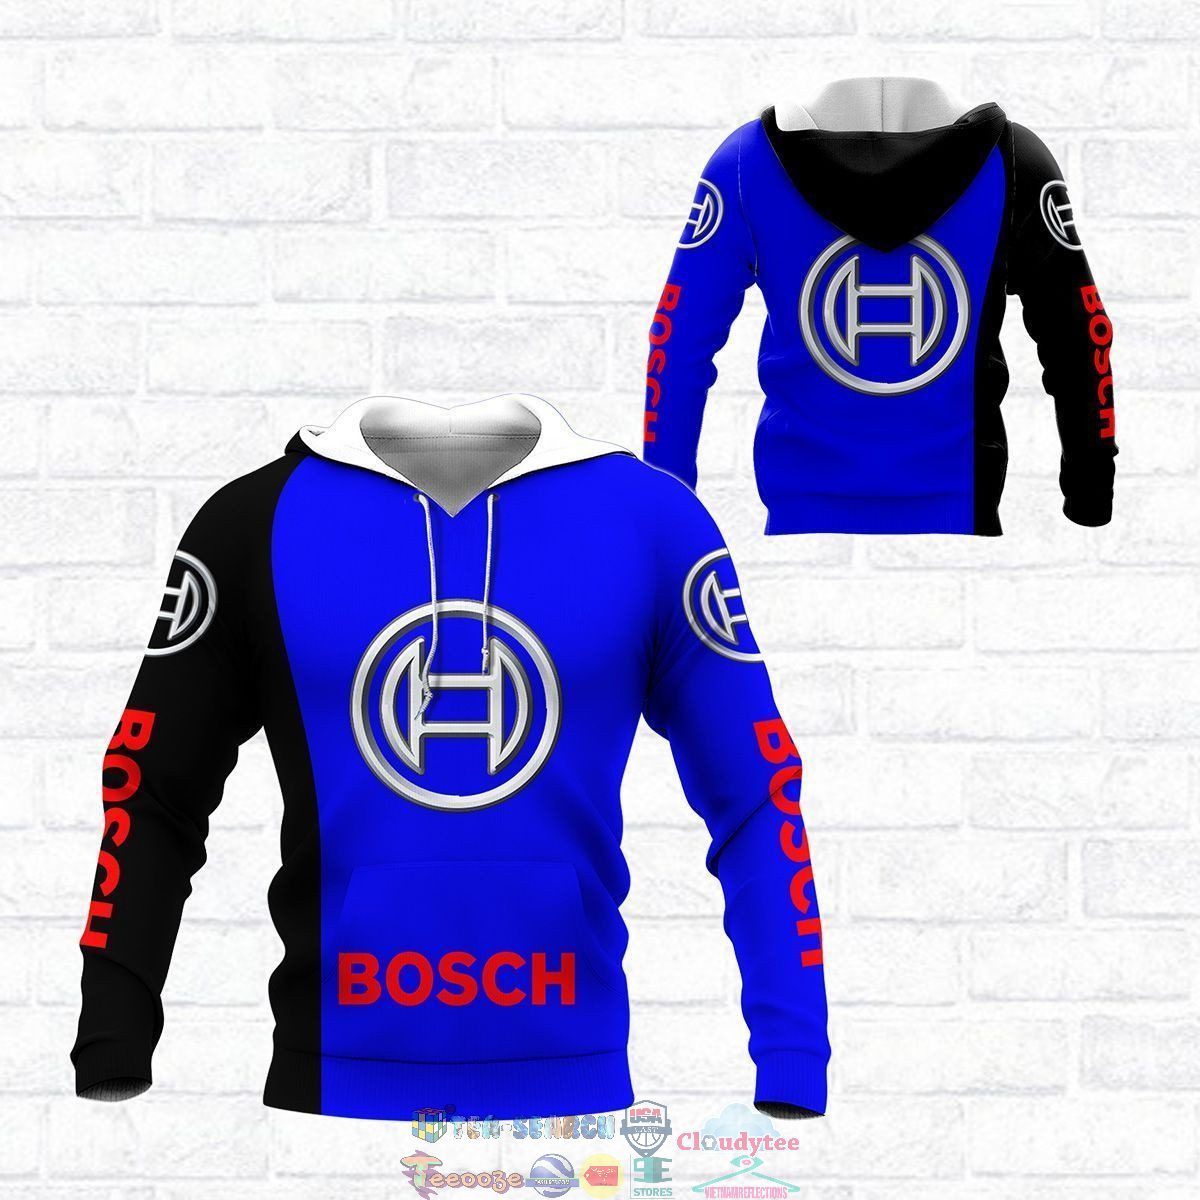 59iLQKz3-TH090822-34xxxRobert-Bosch-GmbH-ver-6-3D-hoodie-and-t-shirt3.jpg